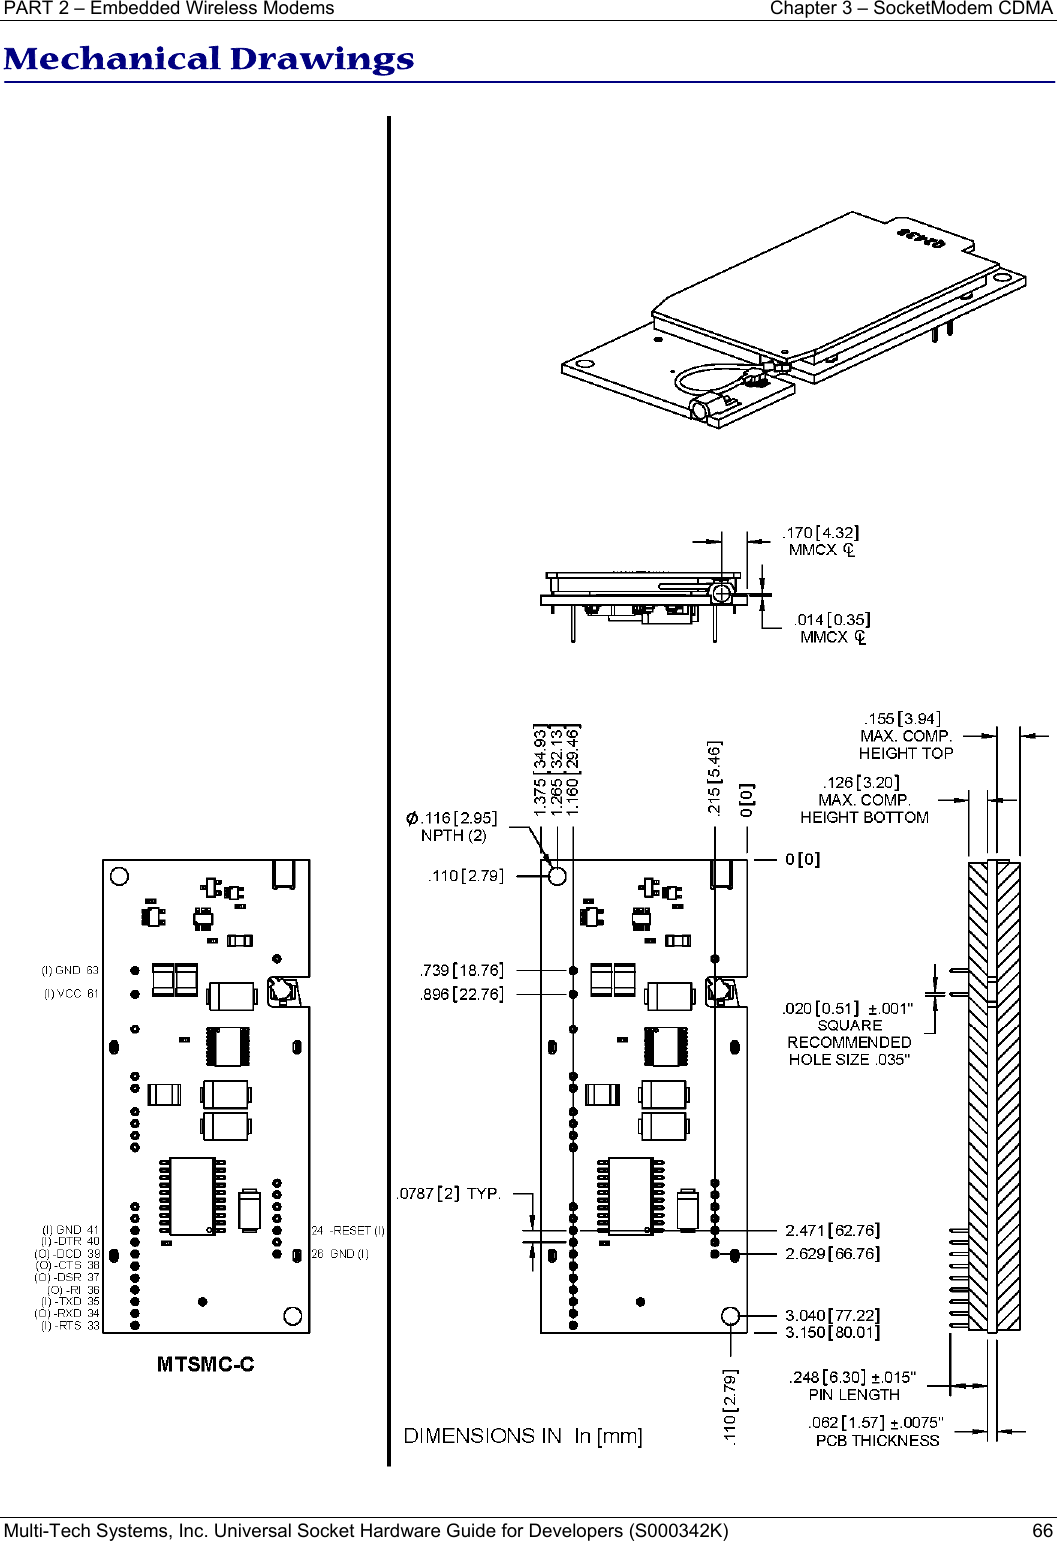 PART 2 – Embedded Wireless Modems  Chapter 3 – SocketModem CDMA  Multi-Tech Systems, Inc. Universal Socket Hardware Guide for Developers (S000342K)  66  Mechanical Drawings  